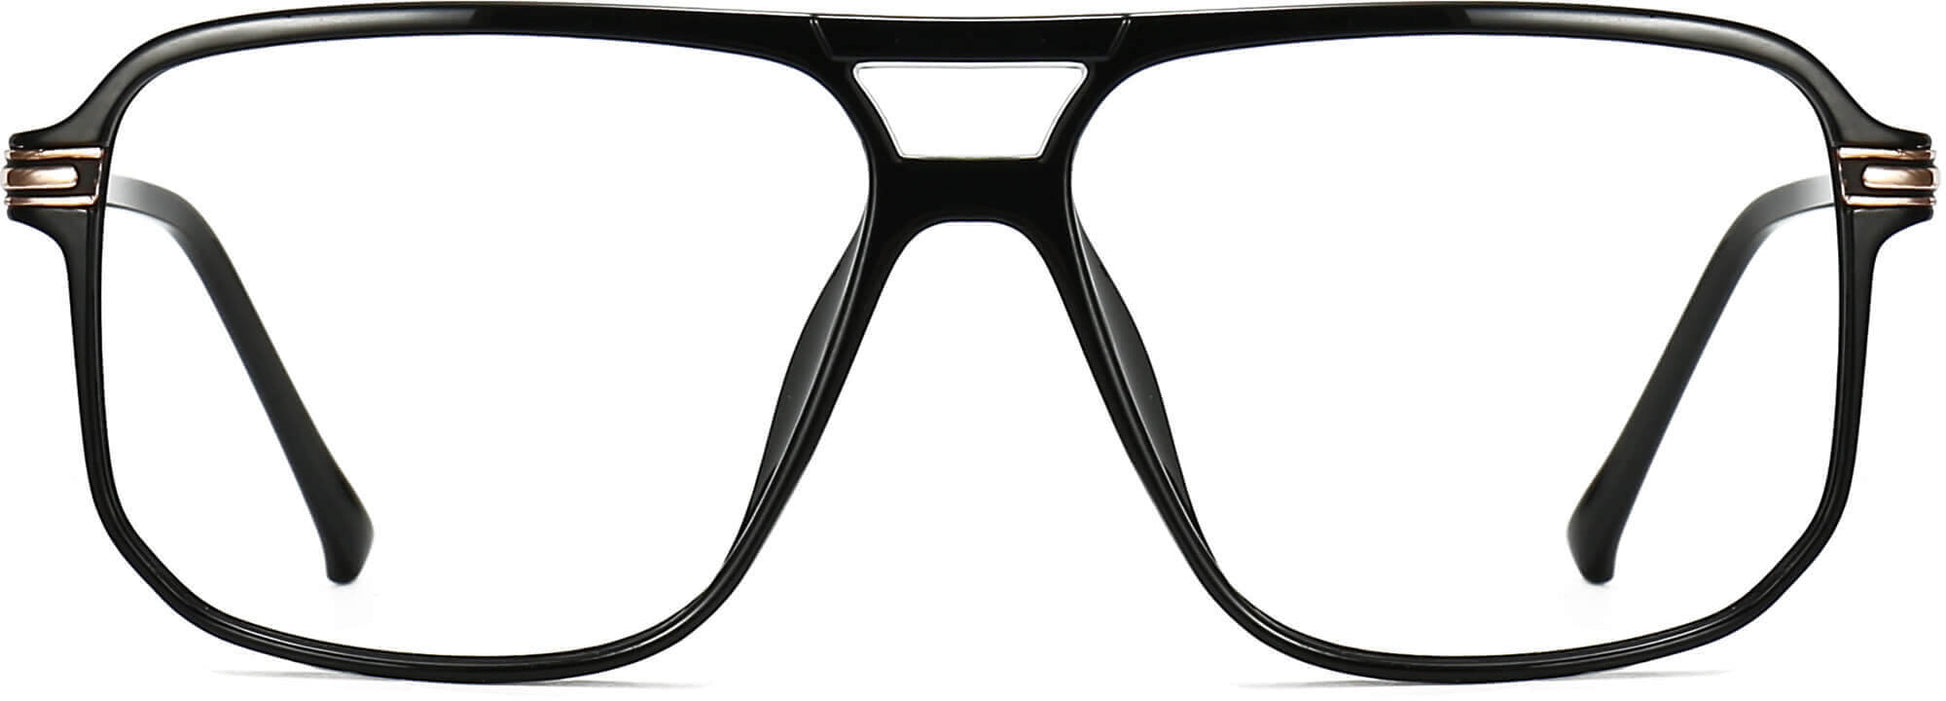 Benjamin Square Black Eyeglasses from ANRRI, front view